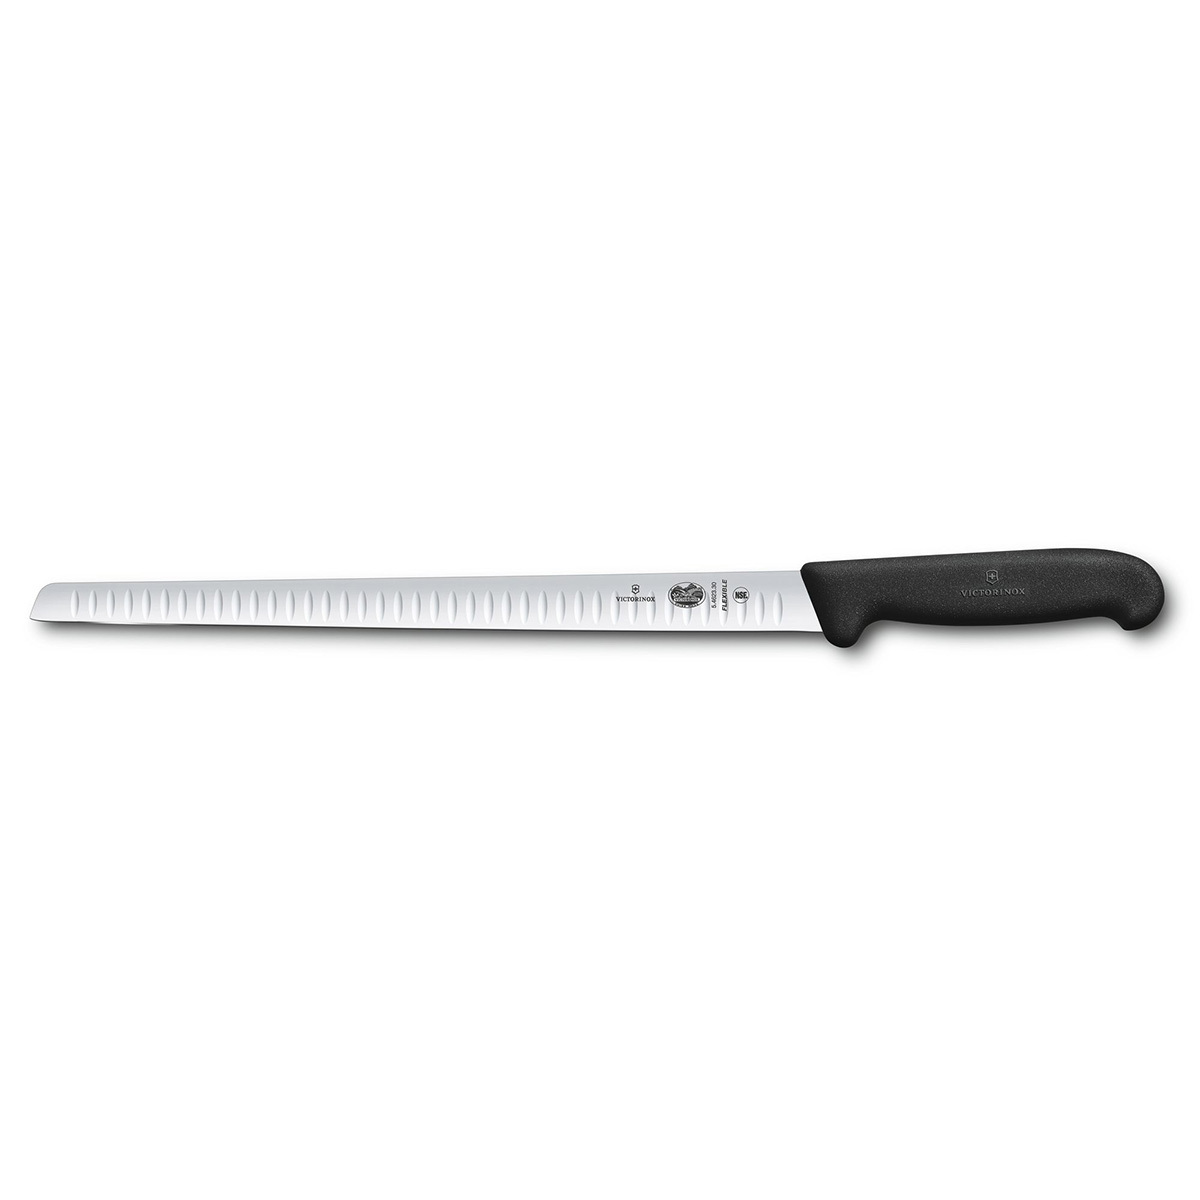 Кухонный нож рыбы Victorinox 5.4623.30 кухонный нож рыбы victorinox 5 4623 30